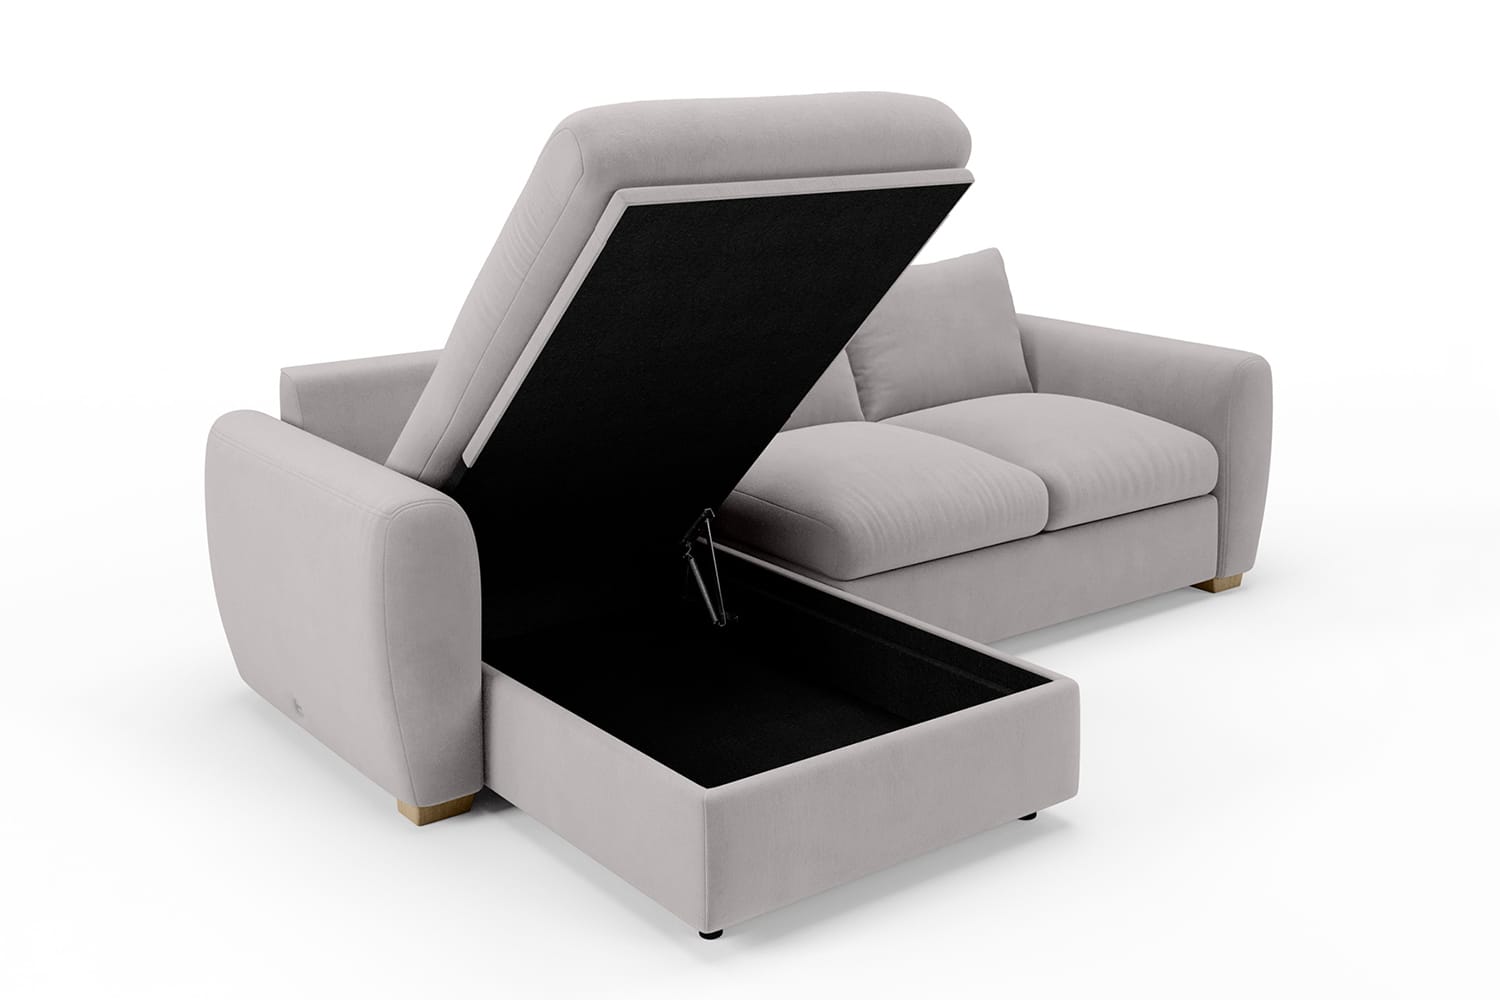 SNUG | The Cloud Sundae Chaise Corner Sofa in Warm Grey variant_40414970282032